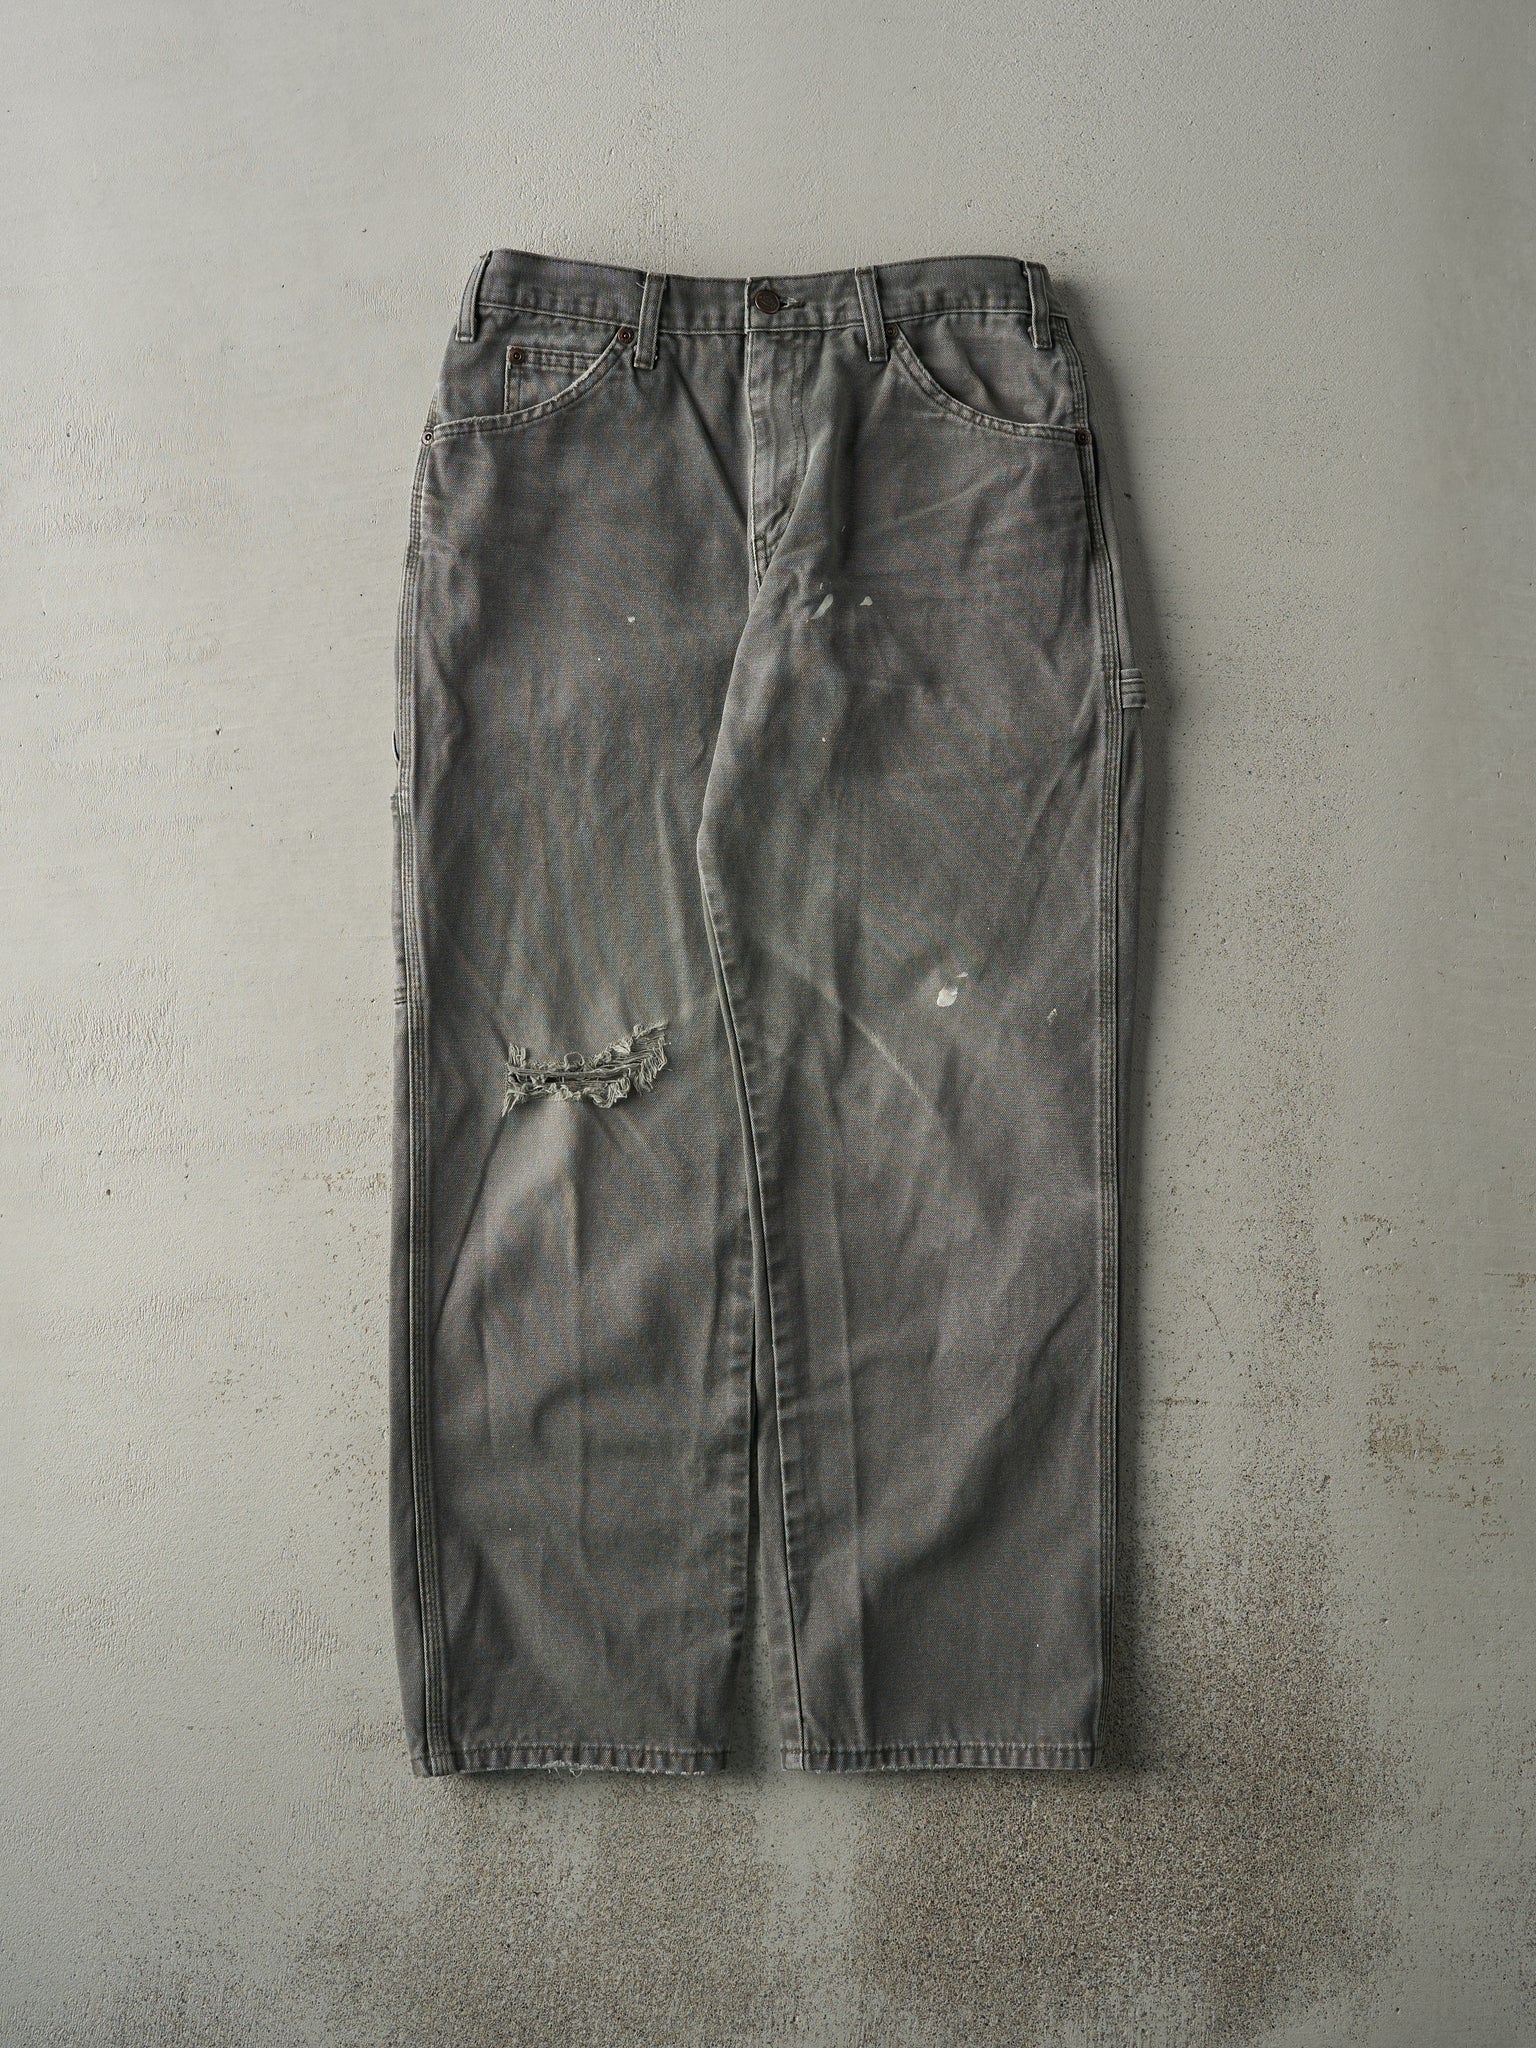 Vintage 90s Washed Green Dickies Carpenter Pants (31x29)